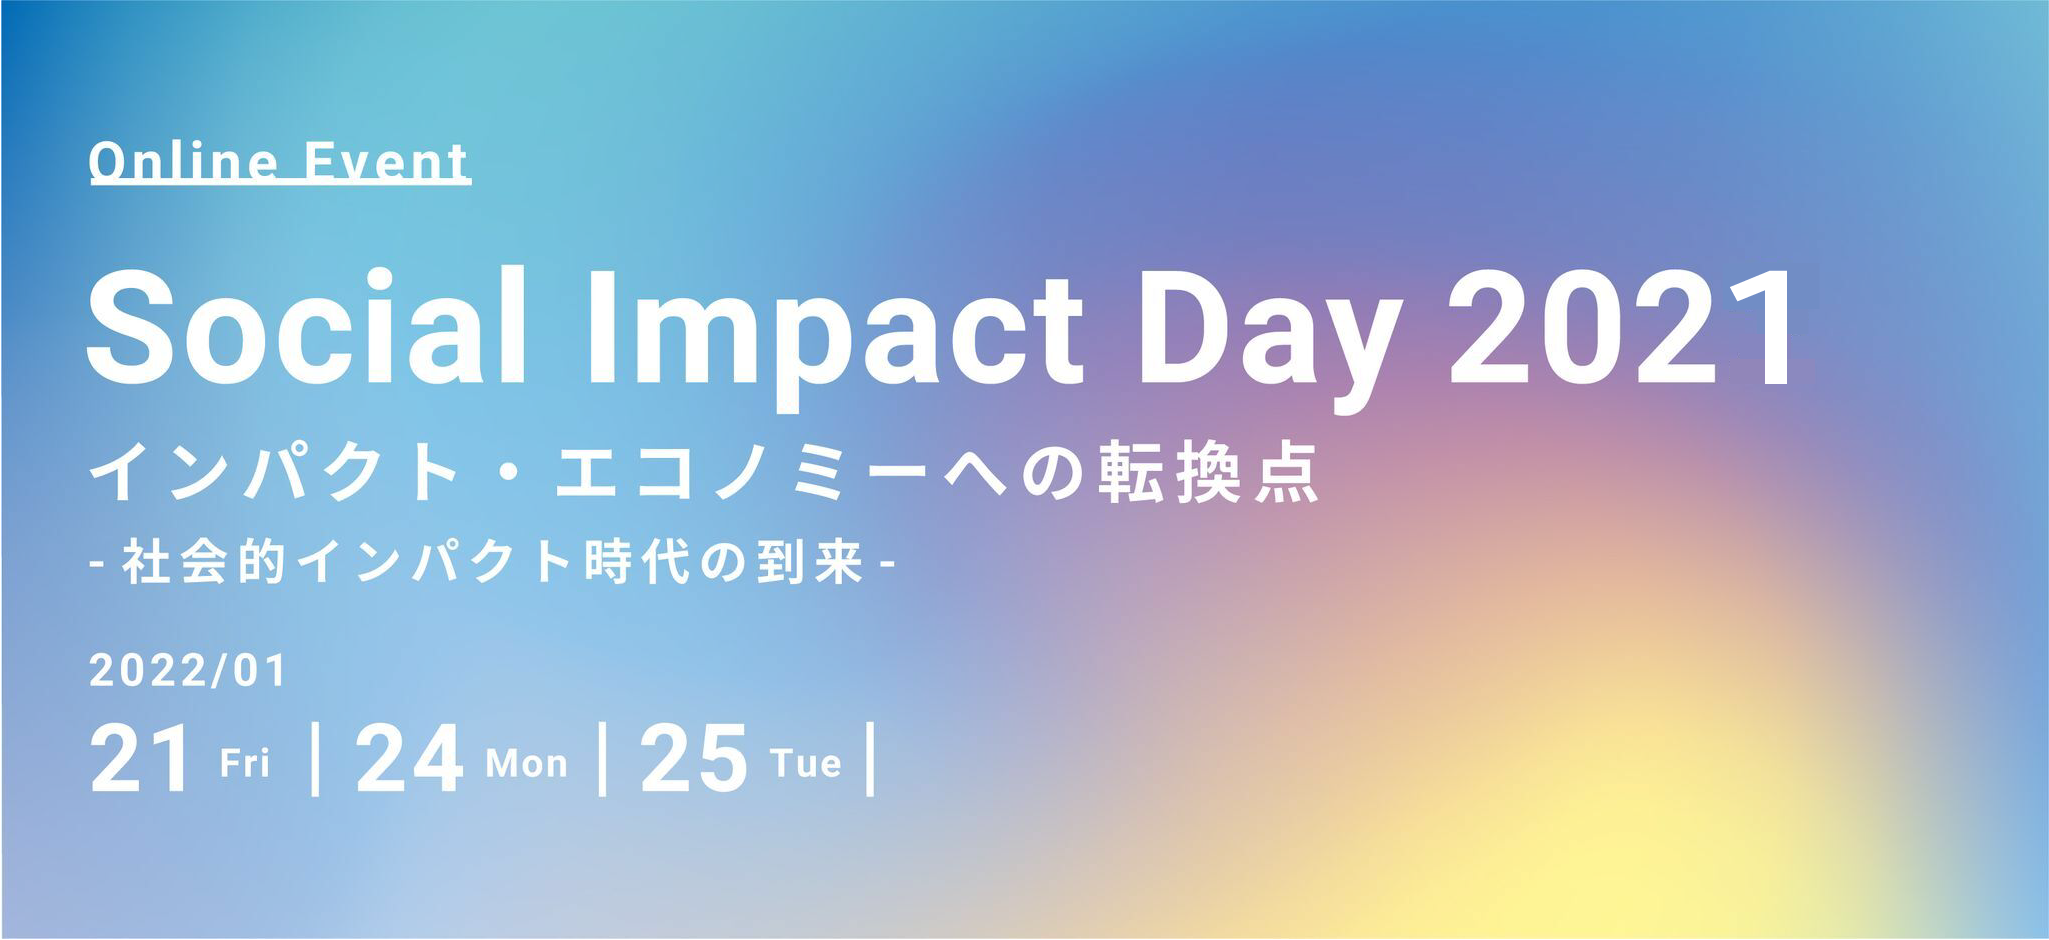 Social Impact Day 2021　概要